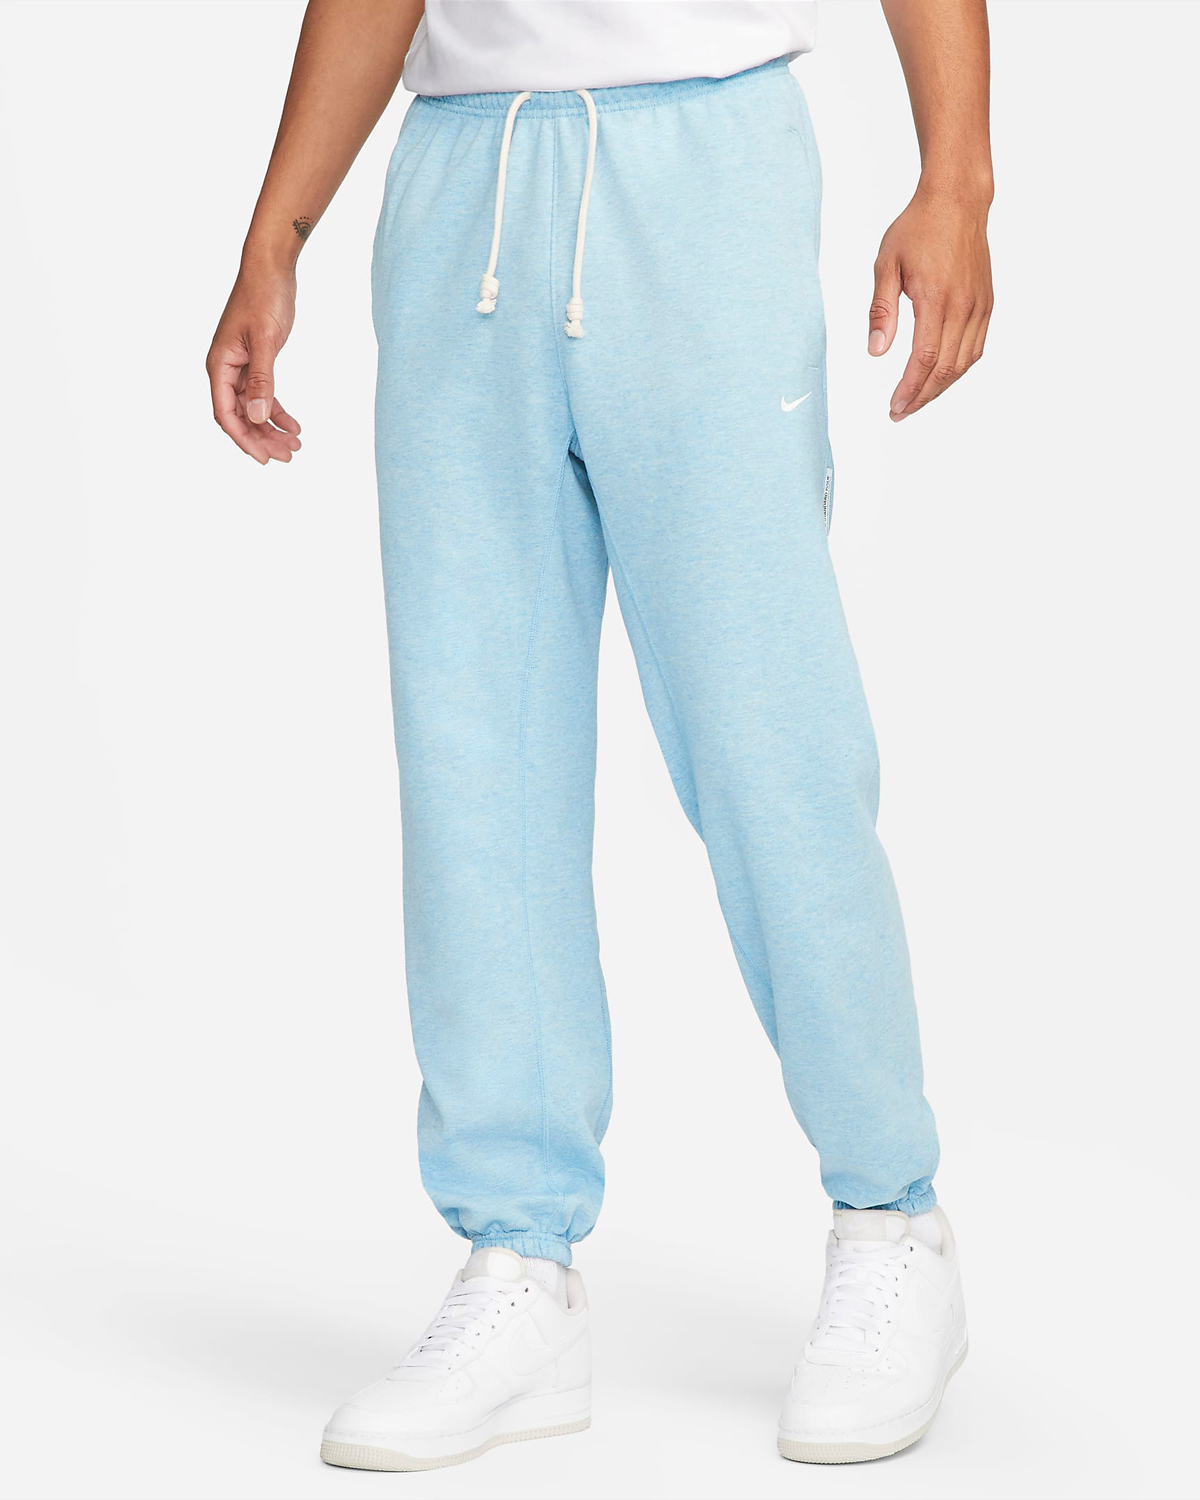 Nike-Standard-Issue-Pants-Worn-Blue